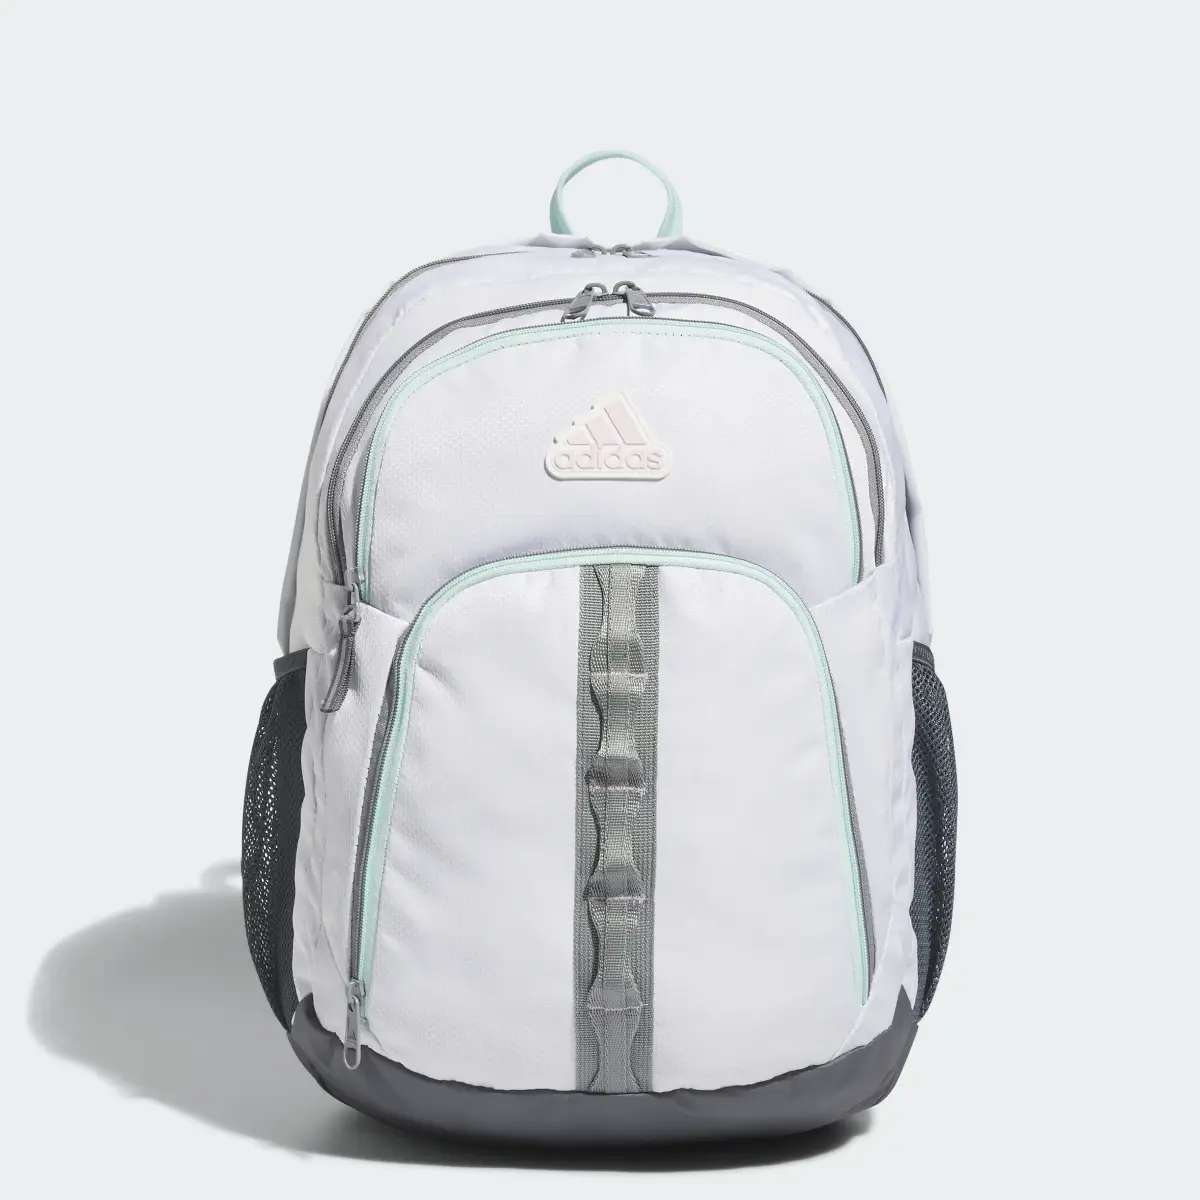 Adidas Prime Backpack. 1